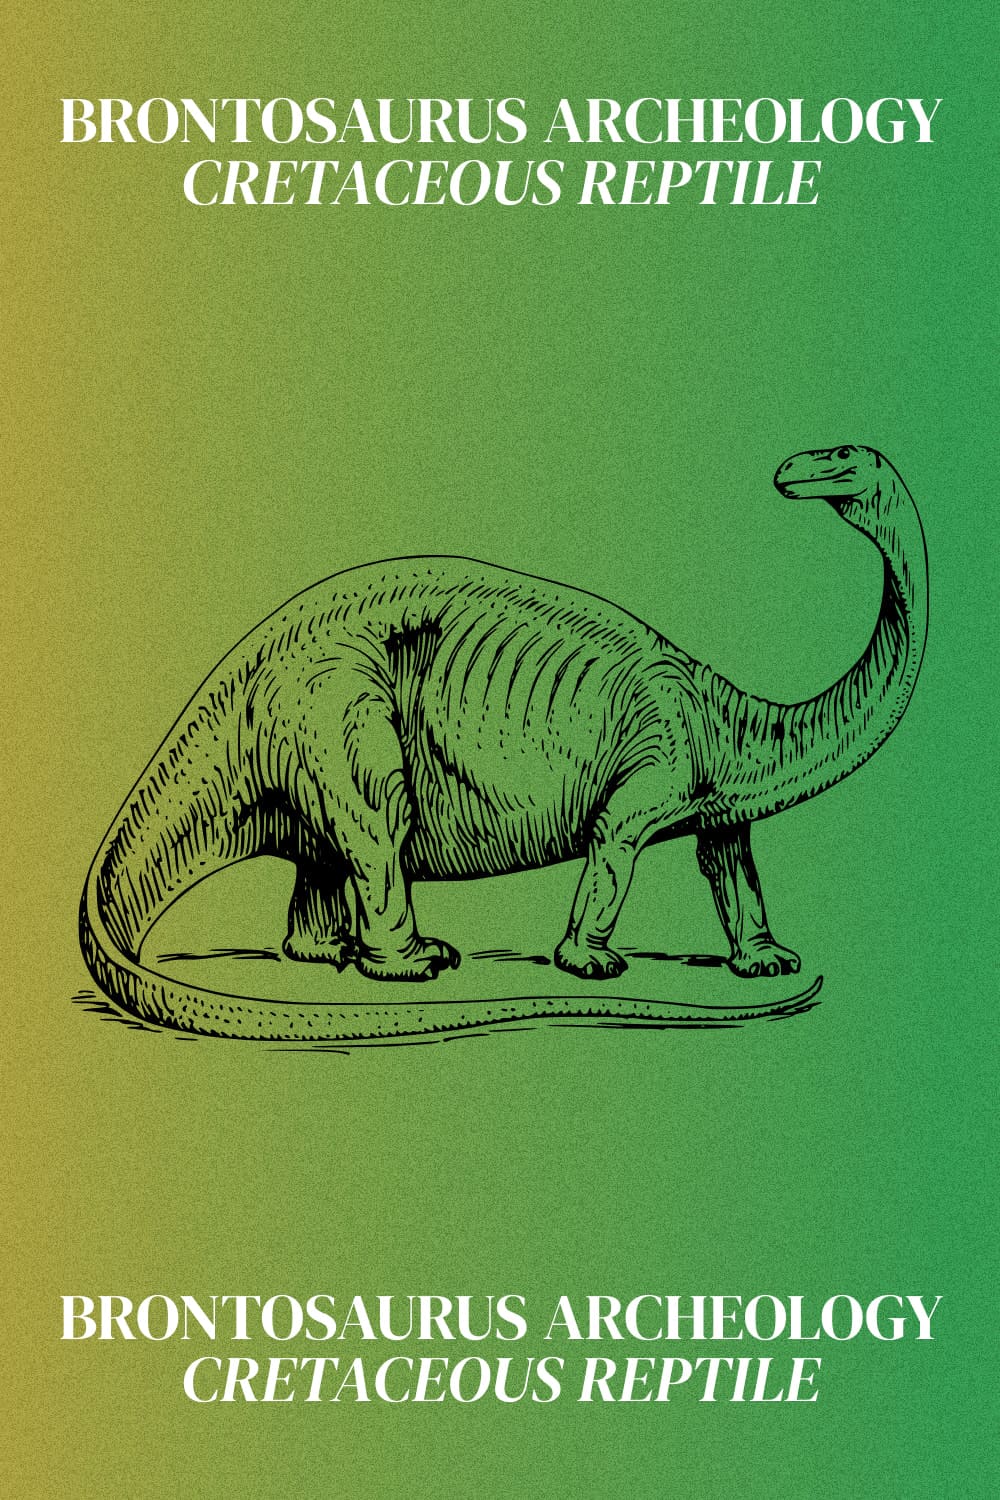 Brontosaurus Archeology Cretaceous Reptile - Pinterest Image.